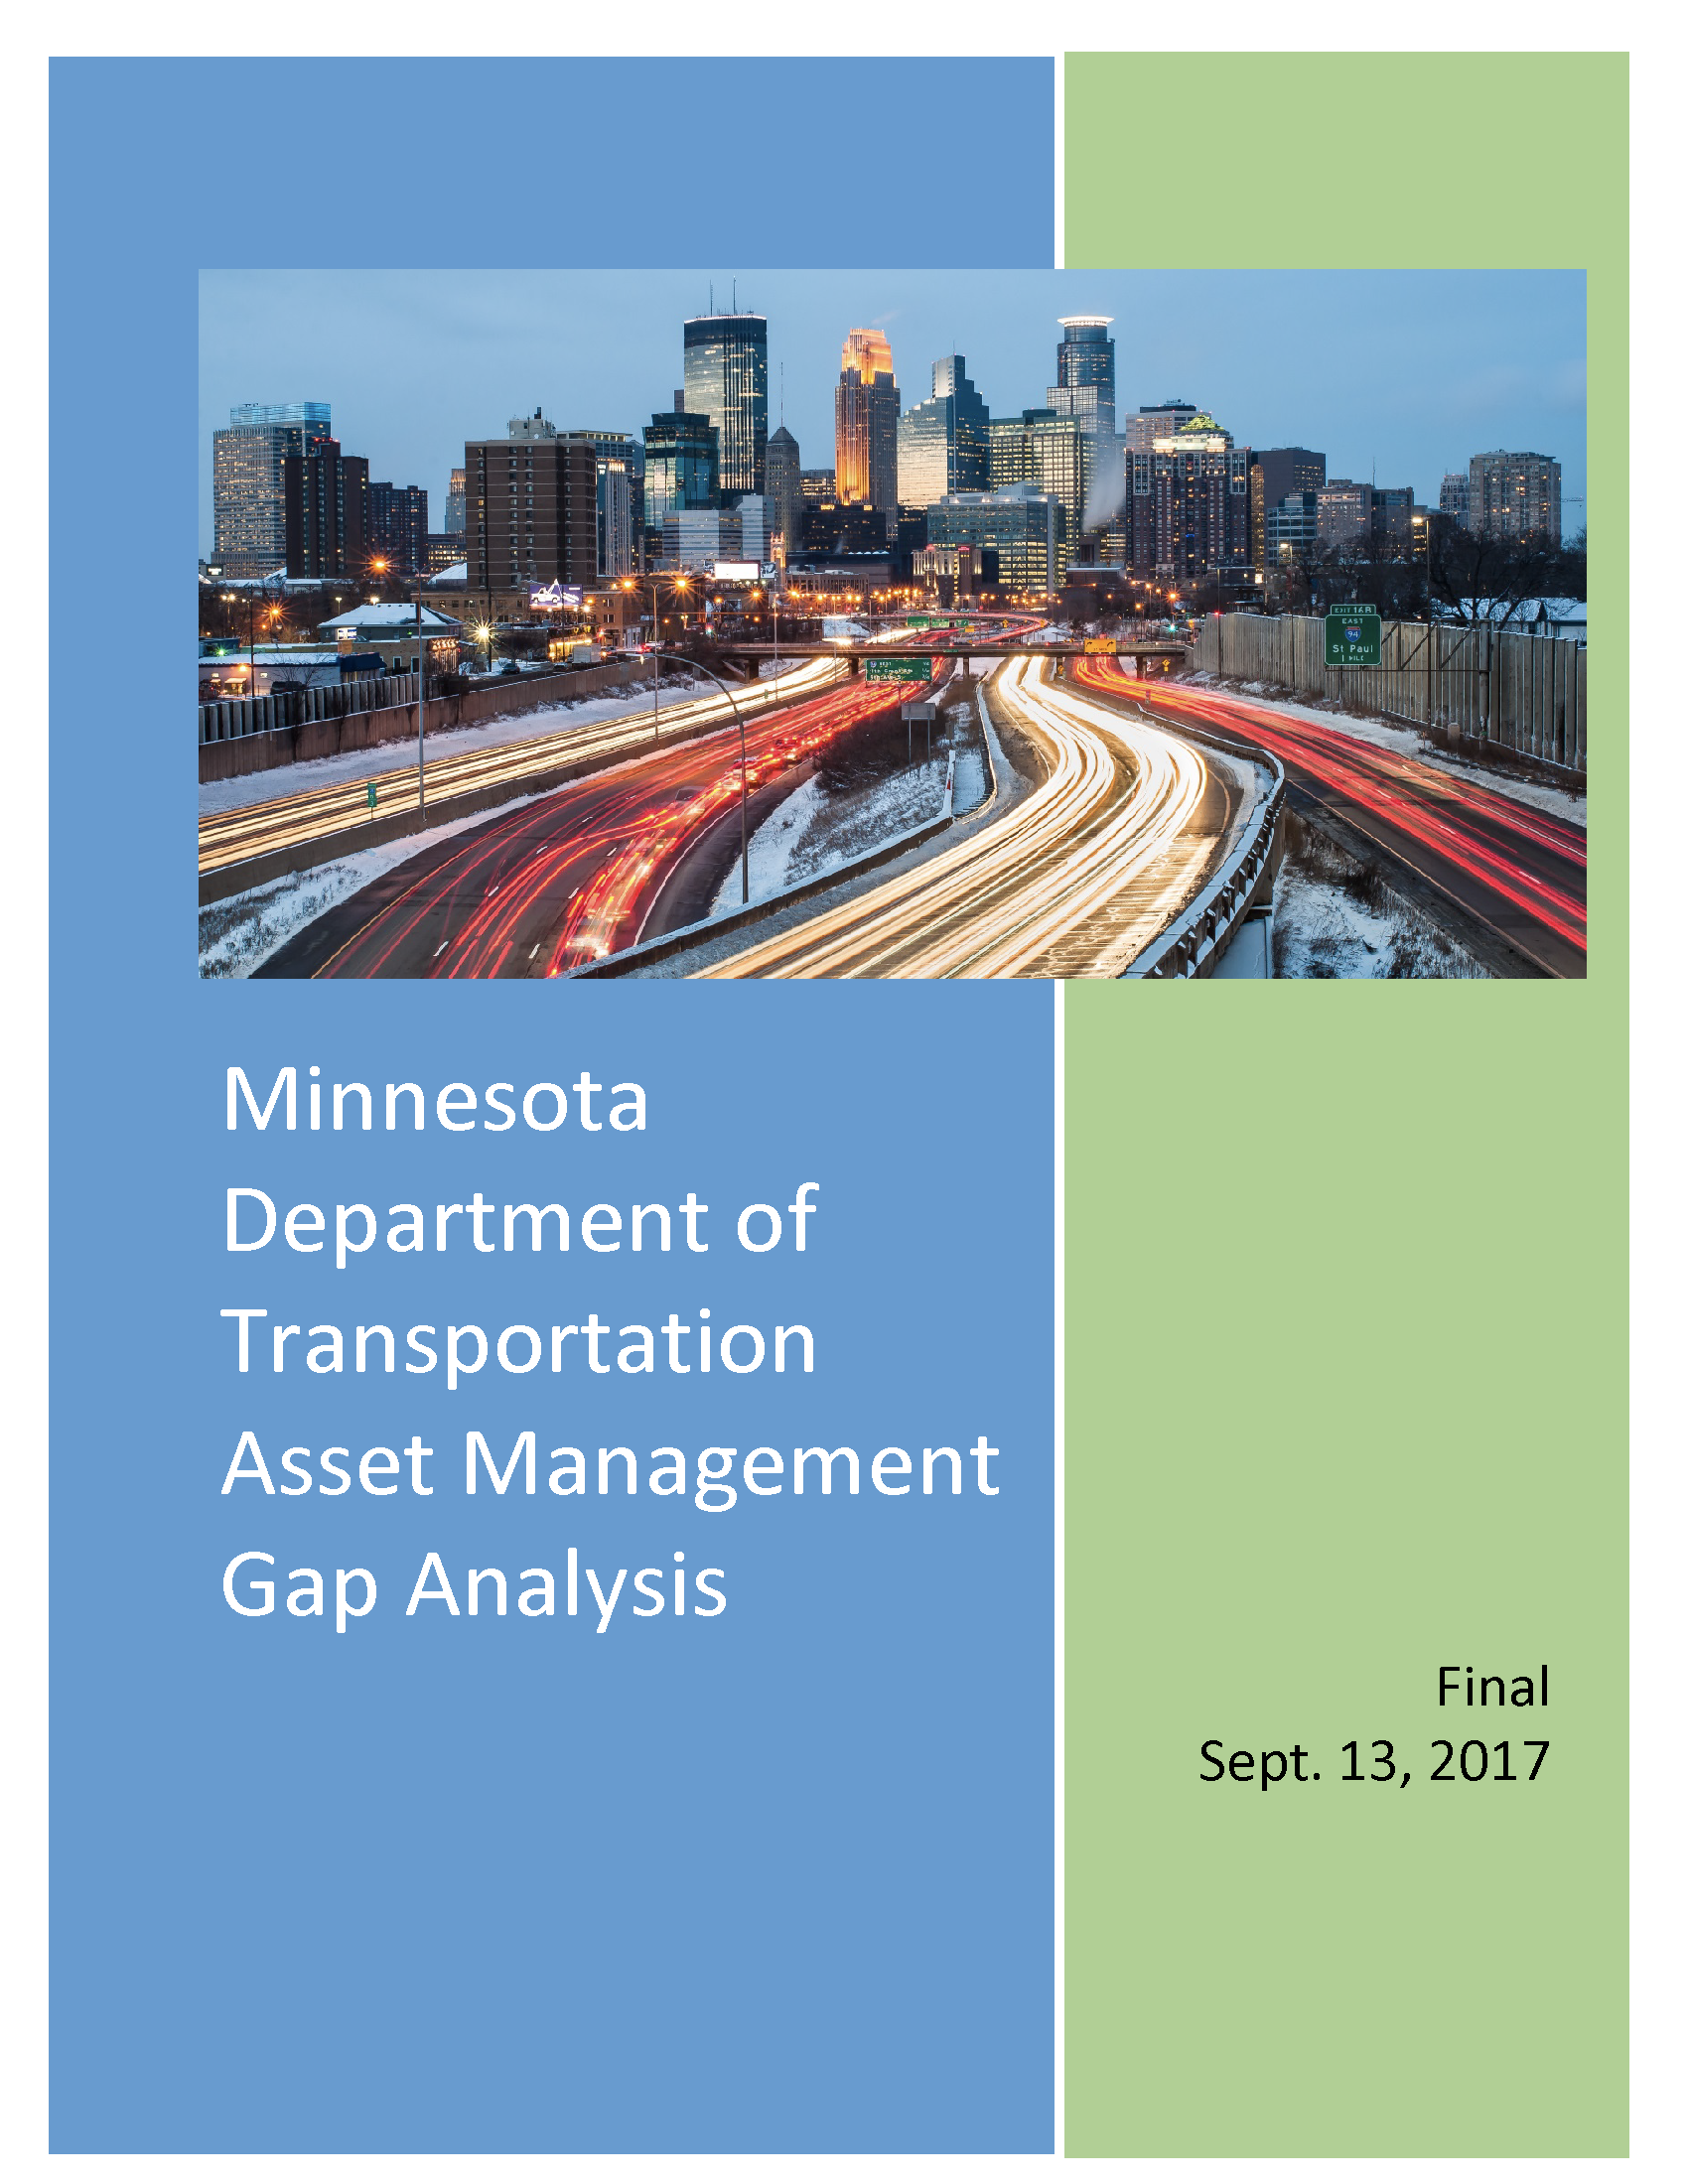 Asset Management Gap Analysis (title page)